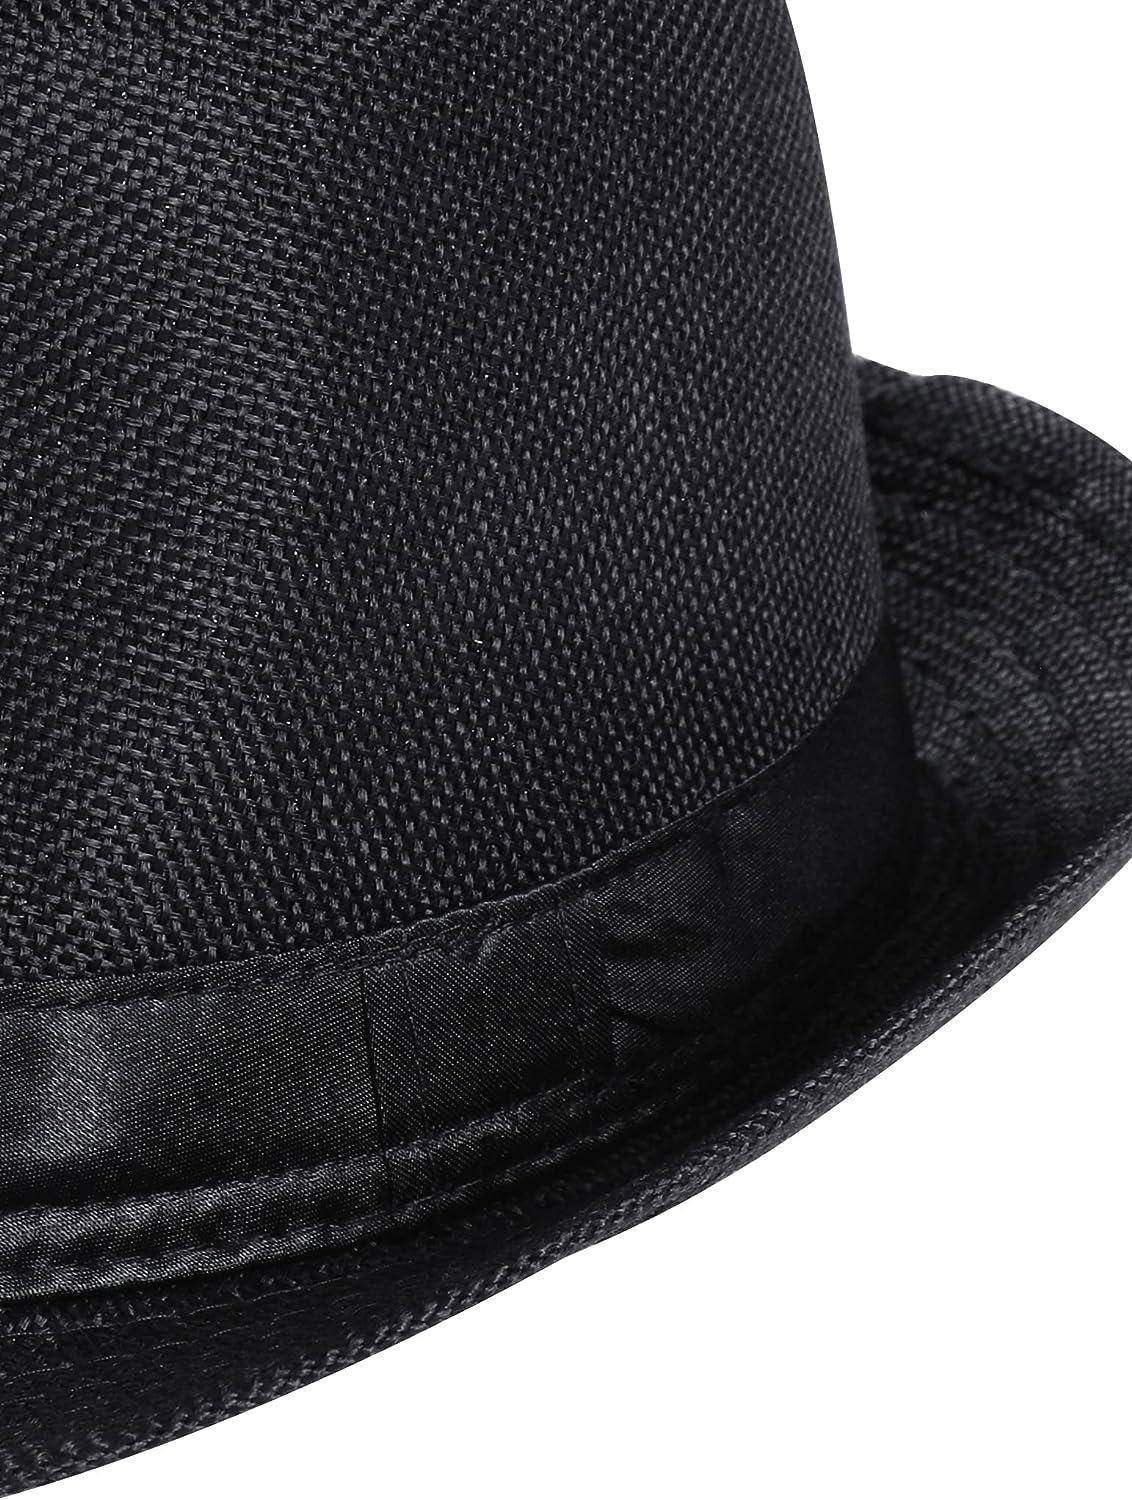 BABEYOND Straw Fedora Hat for Men Panama Trilby Hat Short Brim